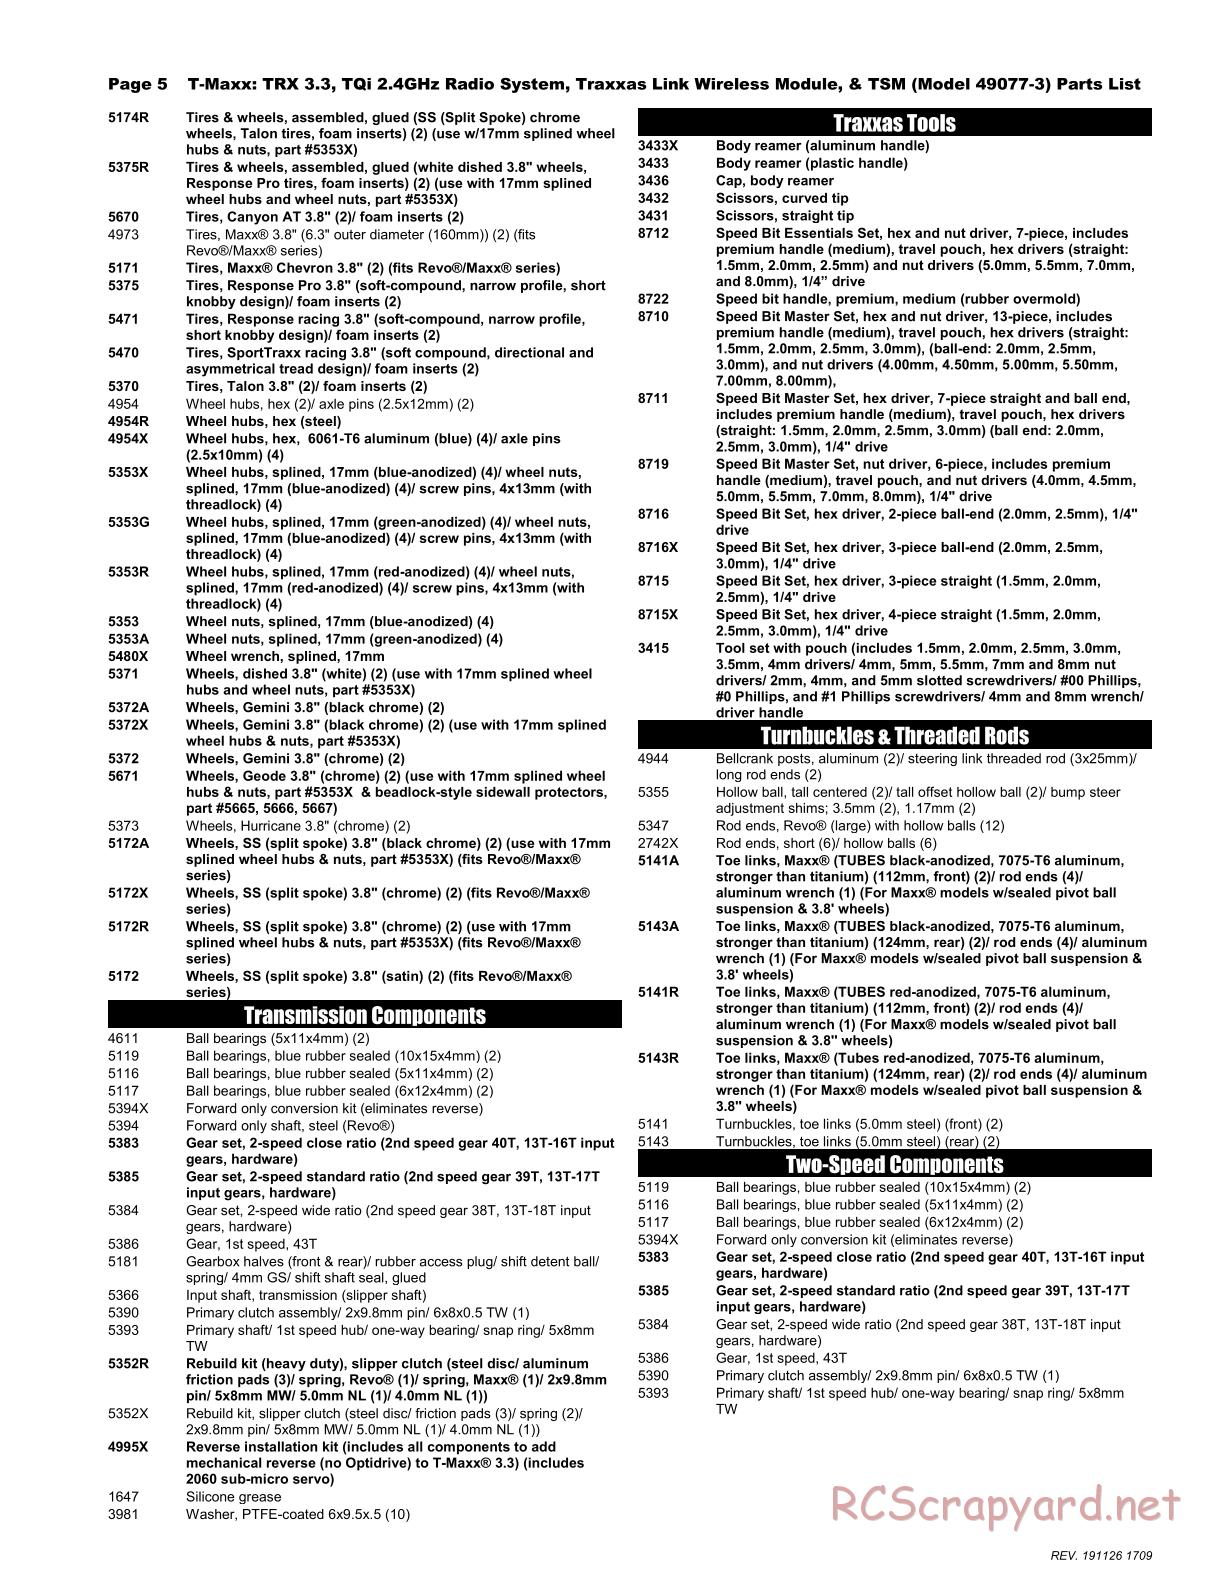 Traxxas - T-Maxx 3.3 TSM - Parts List - Page 5